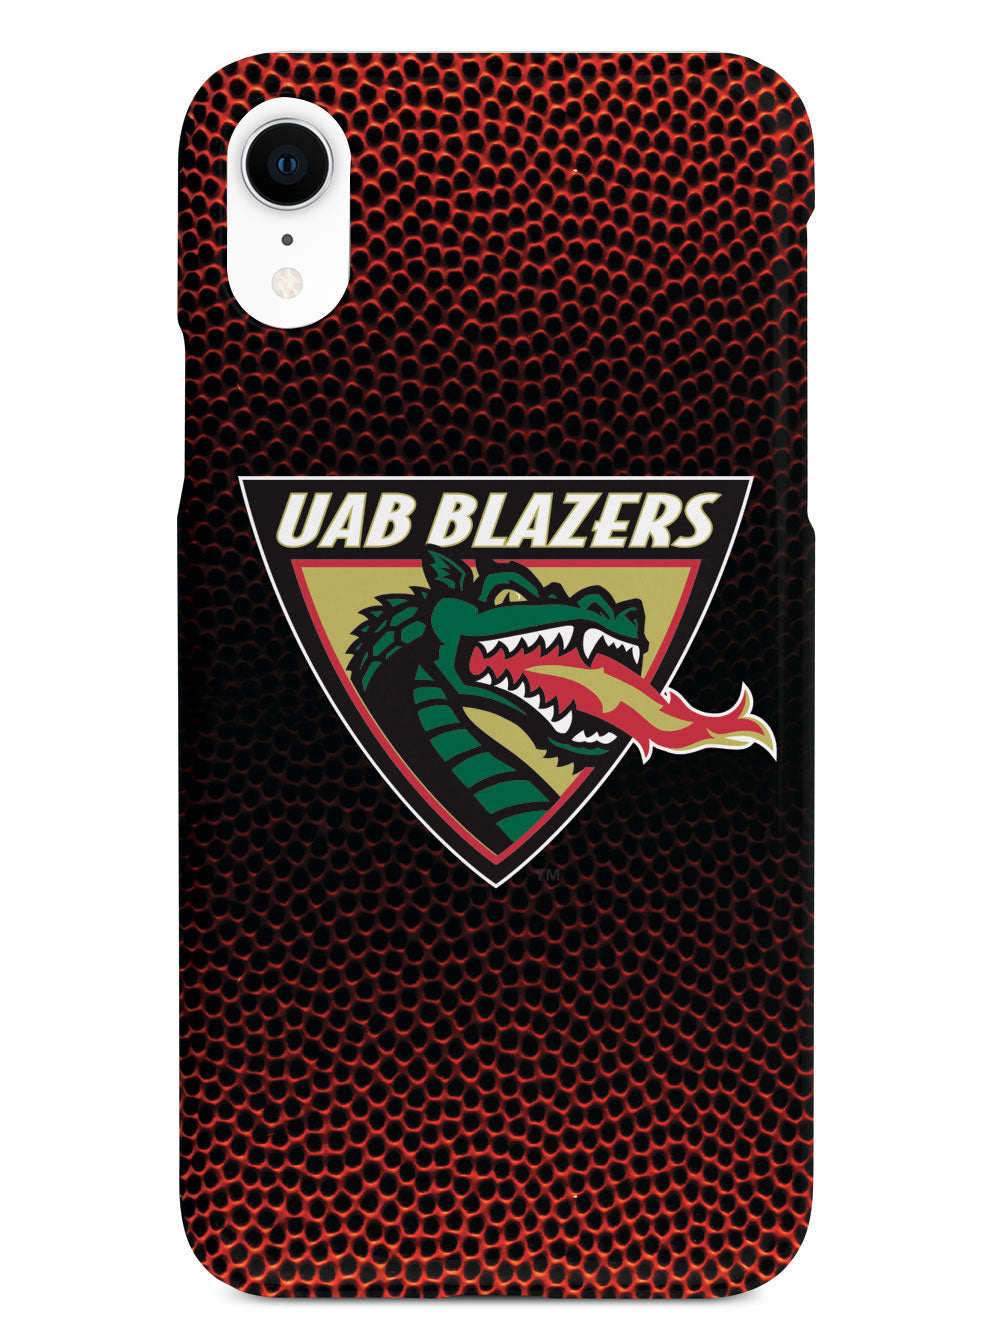 UAB Blazers - Textured Basketball Case